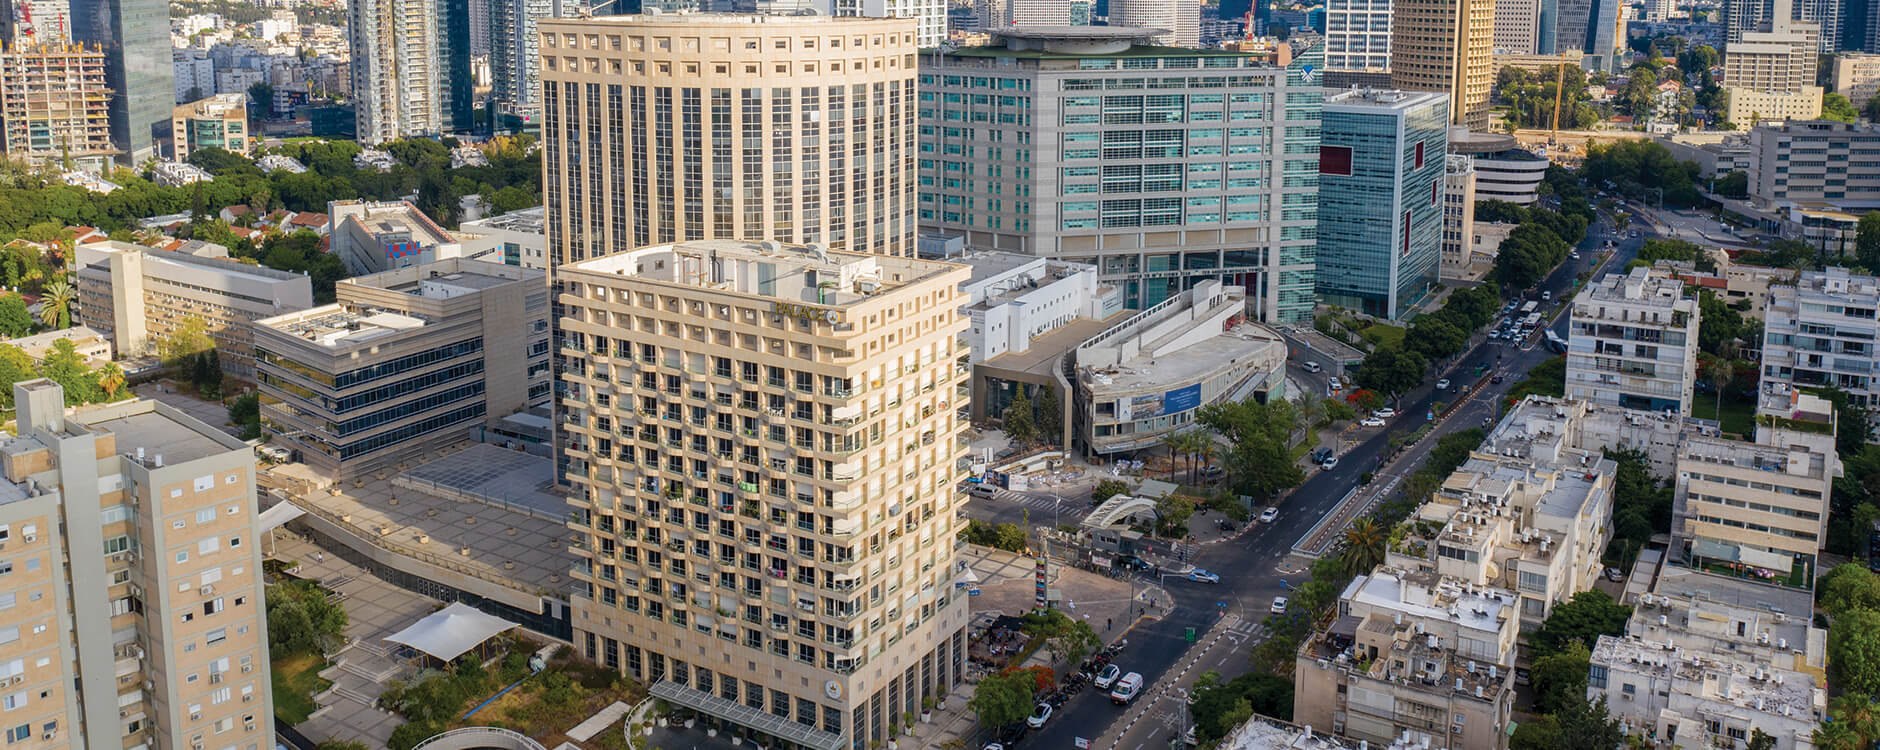 Aerial photograph of Palace Tel Aviv